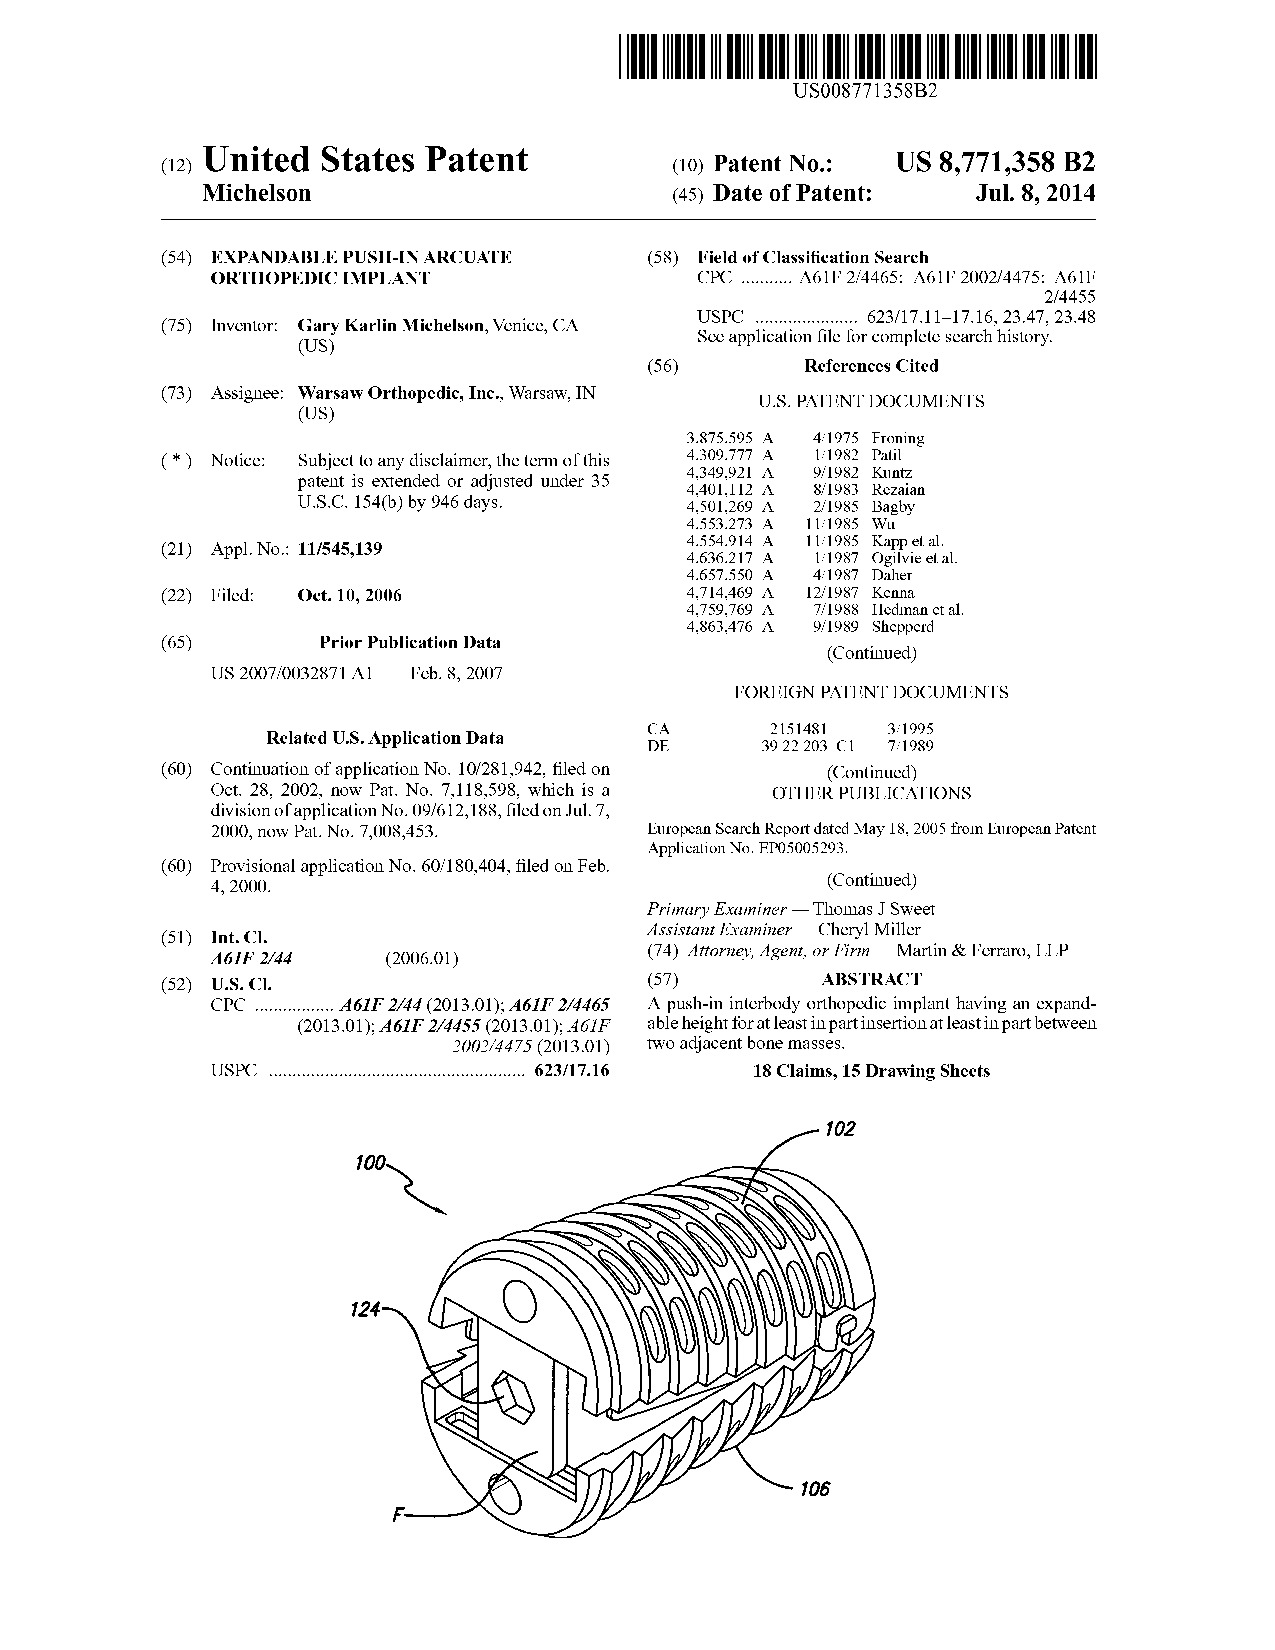 Expandable push-in arcuate orthopedic implant - Patent 8,771,358